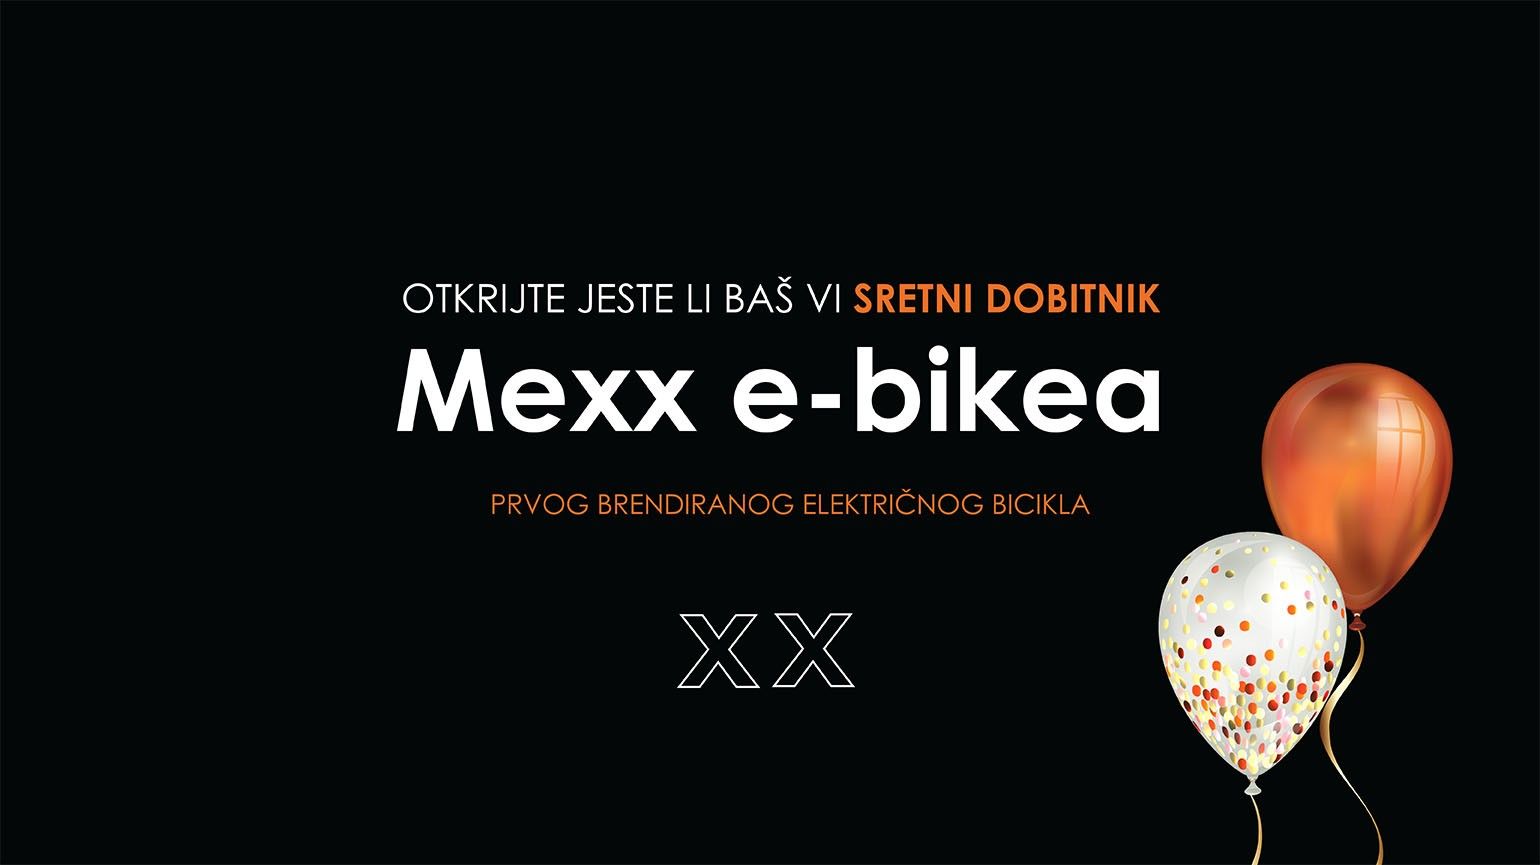 Otkrivamo dobitnike nagradne igre: Osvoji Mexx e-bike